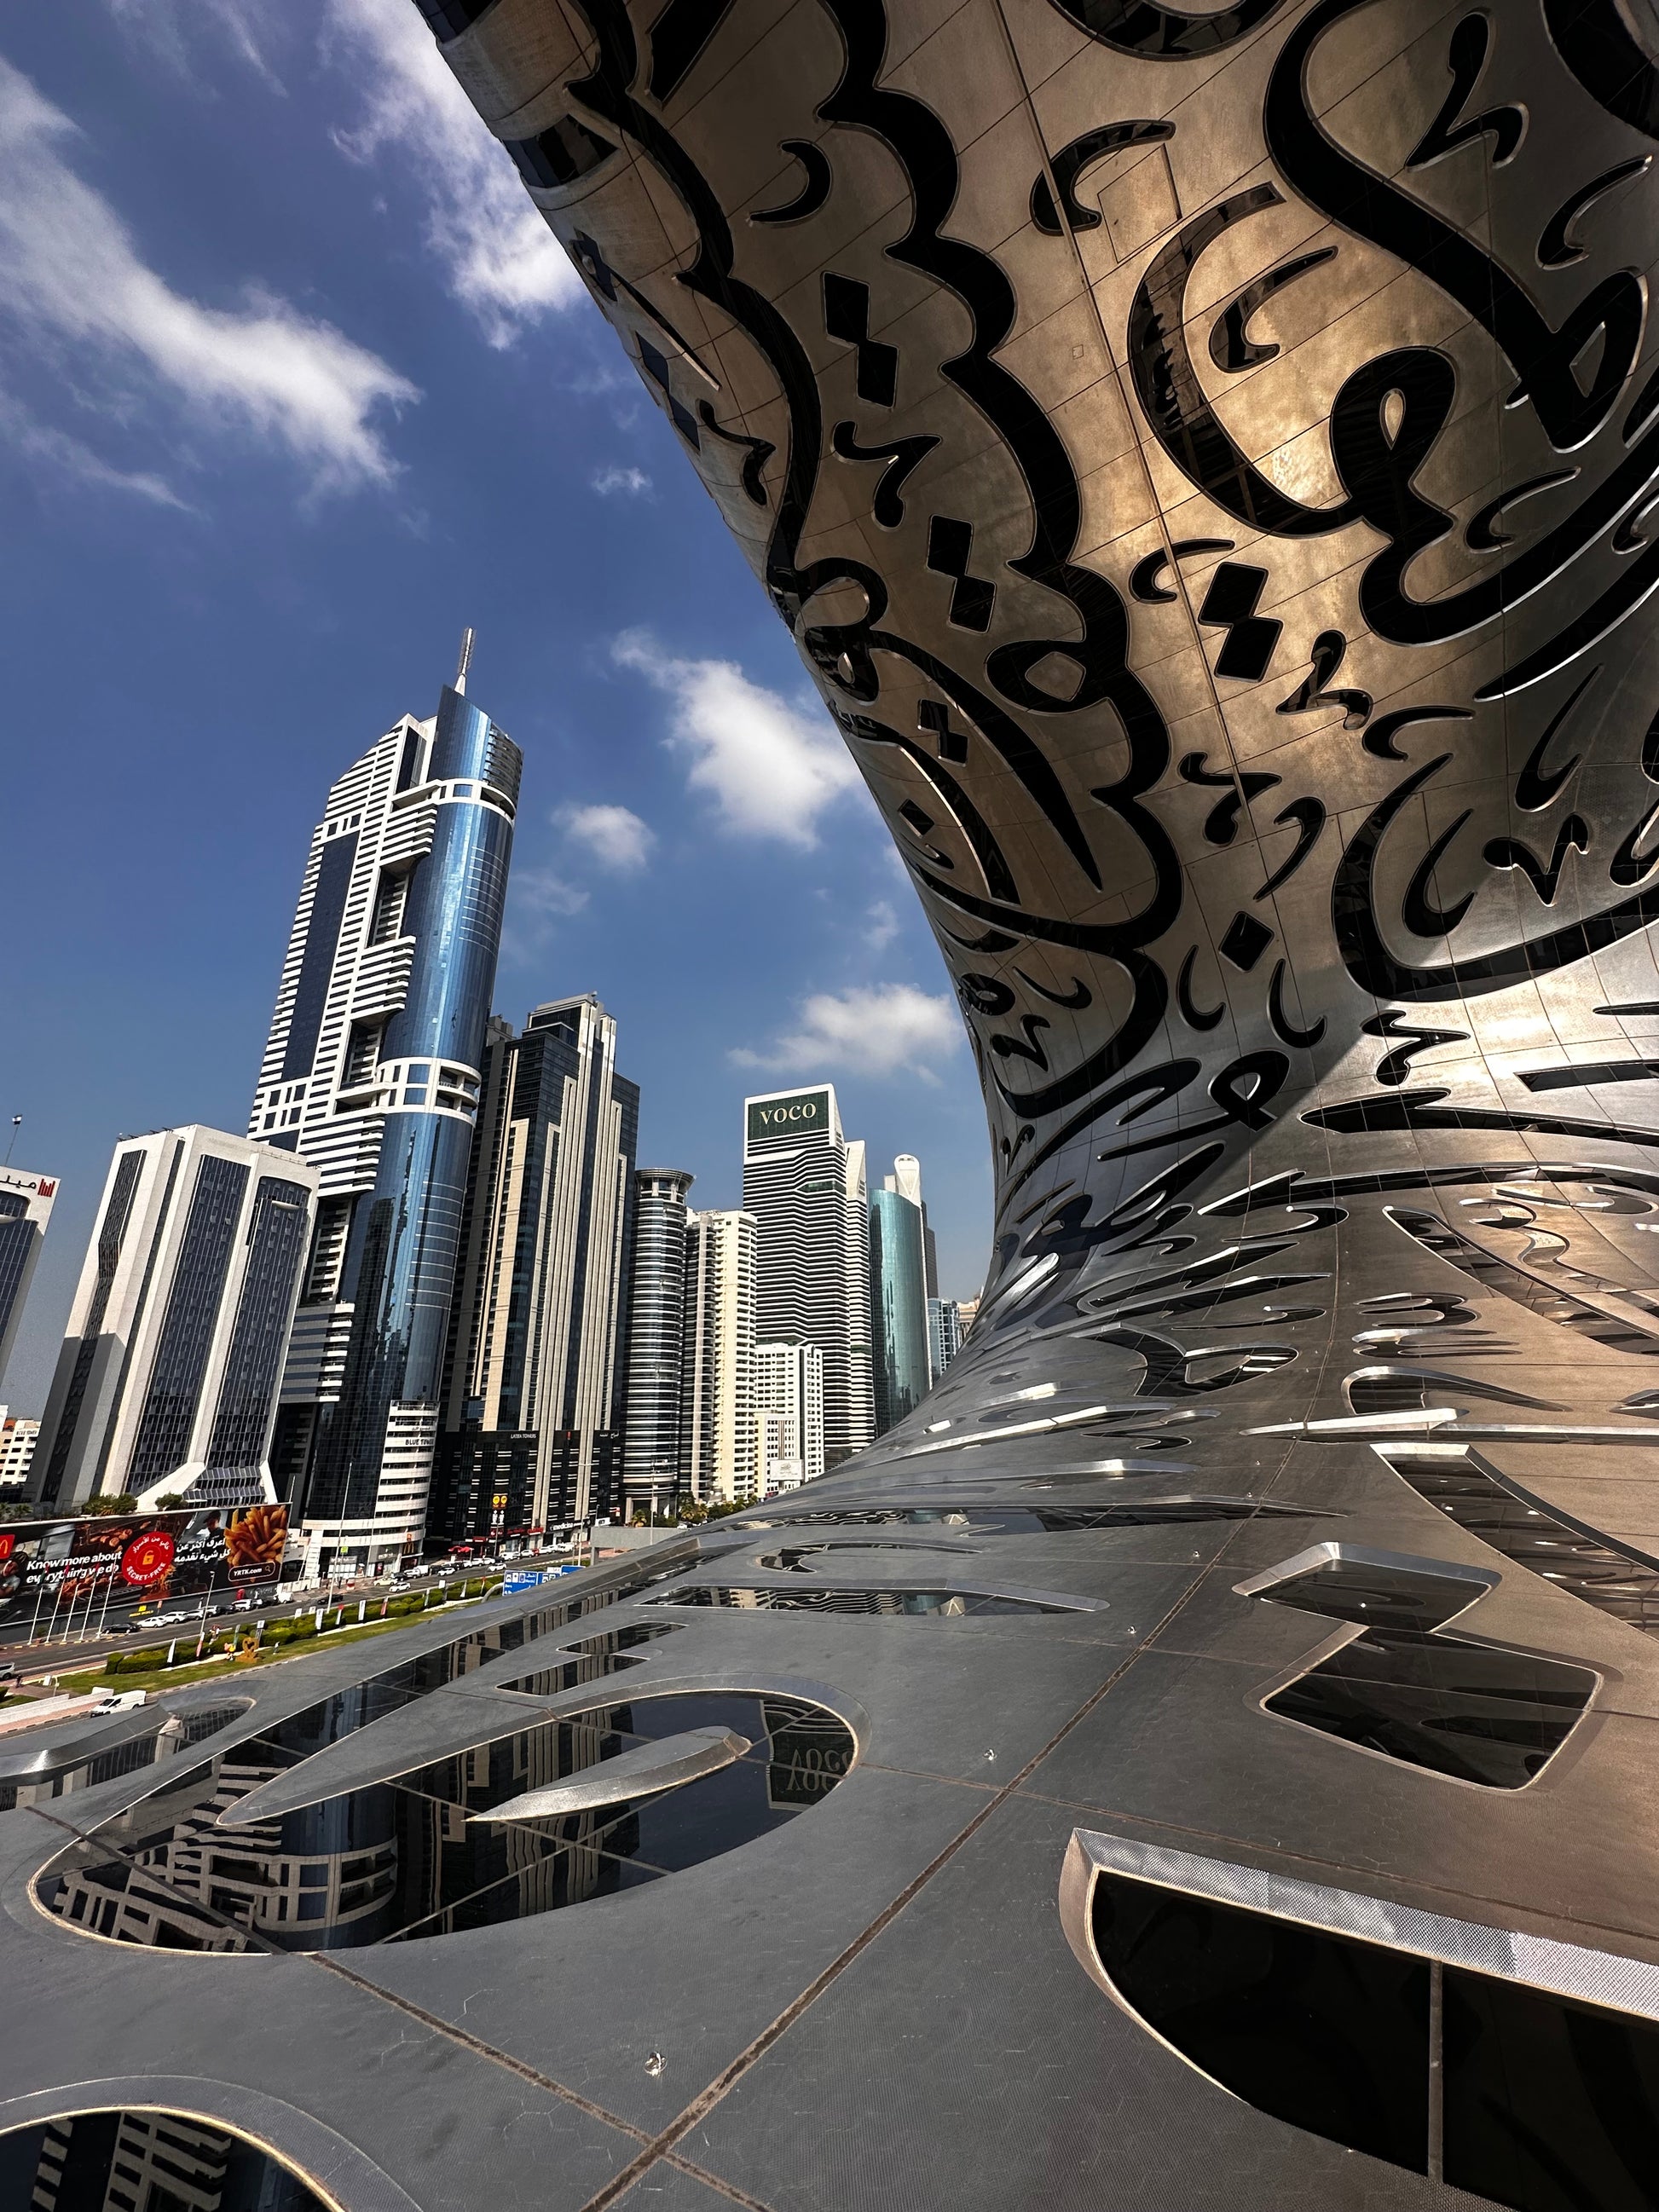 Dubai Combo: Museum Of The Future with Burj Khalifa at the top Tickets - Tripventura